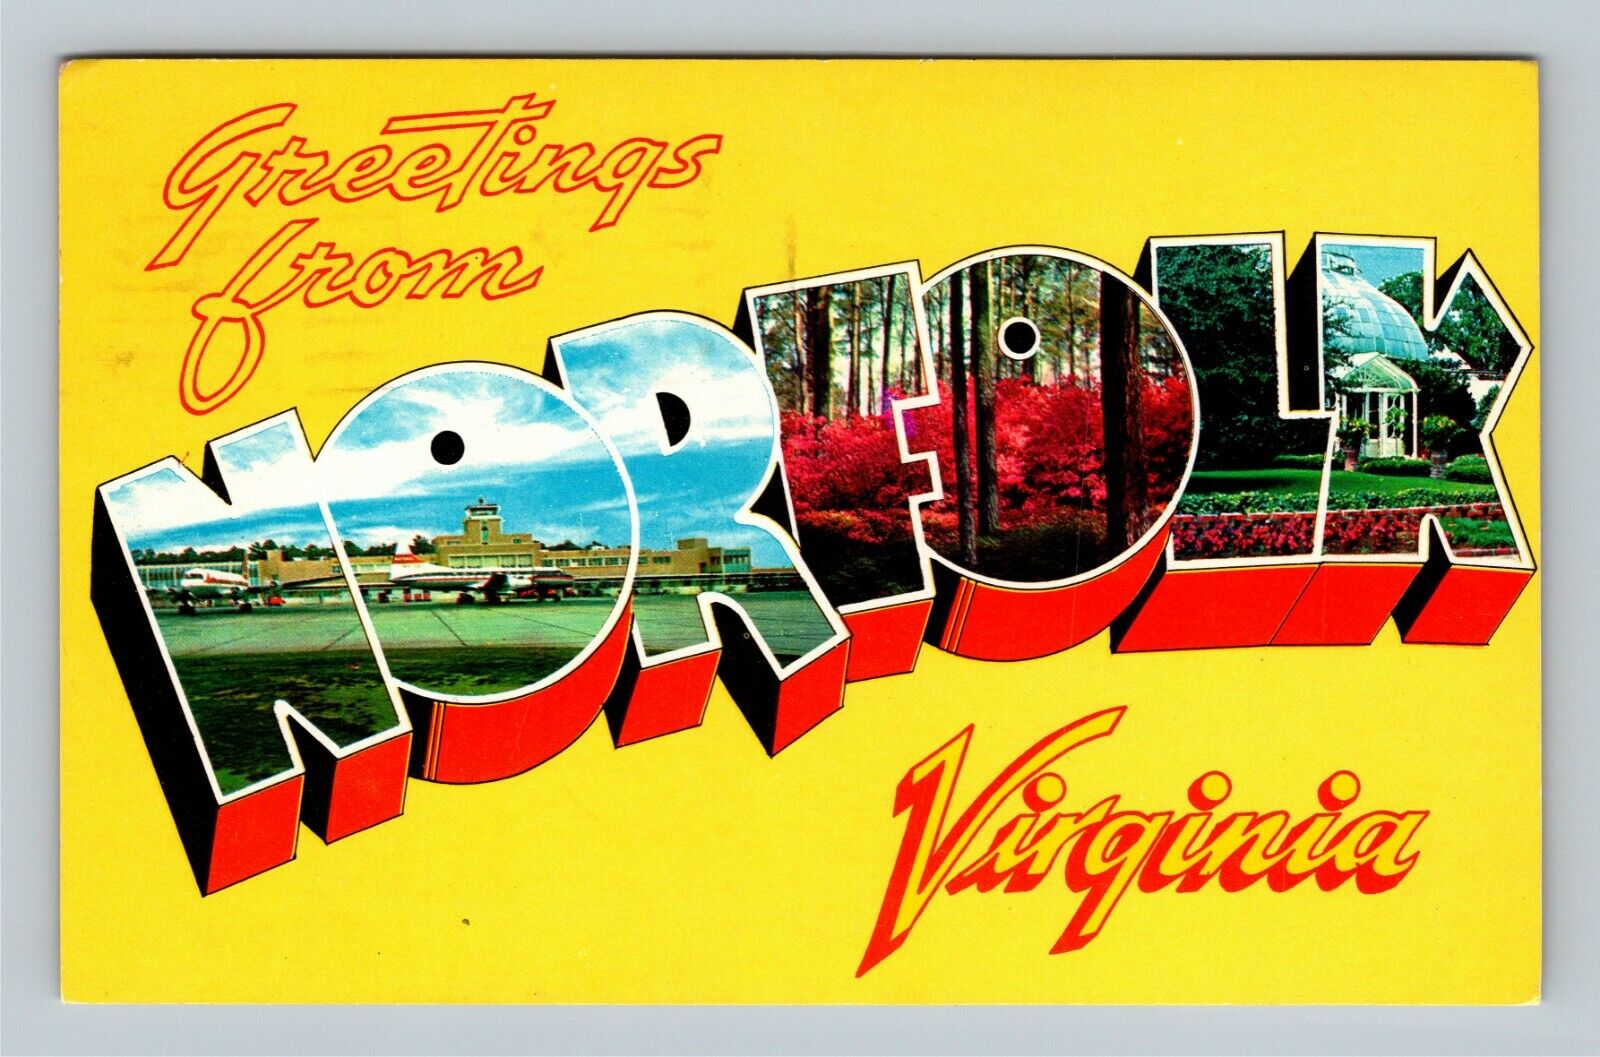 Norfolk VA, LARGE Letter Greetings, Virginia Vintage Postcard